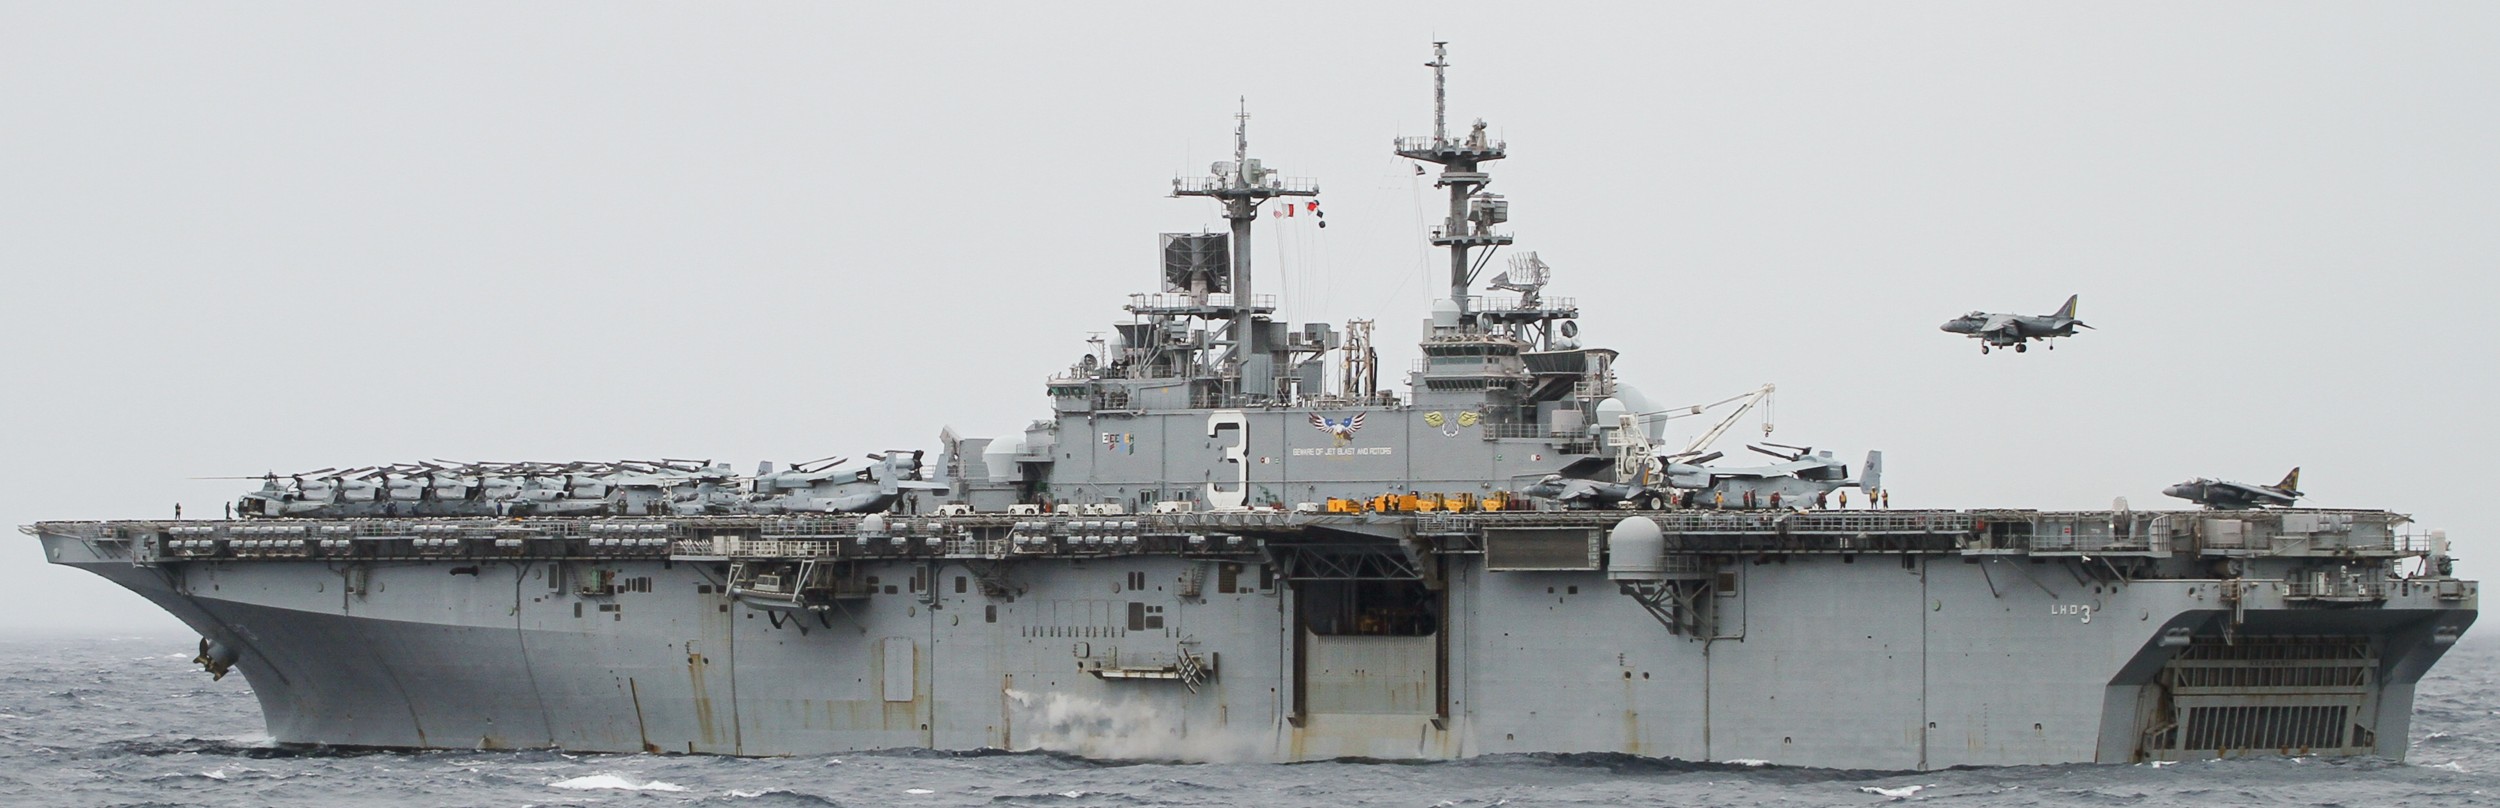 lhd-3 uss kearsarge wasp class amphibious assault ship us navy marines vmm-263 exercise northern viking 230